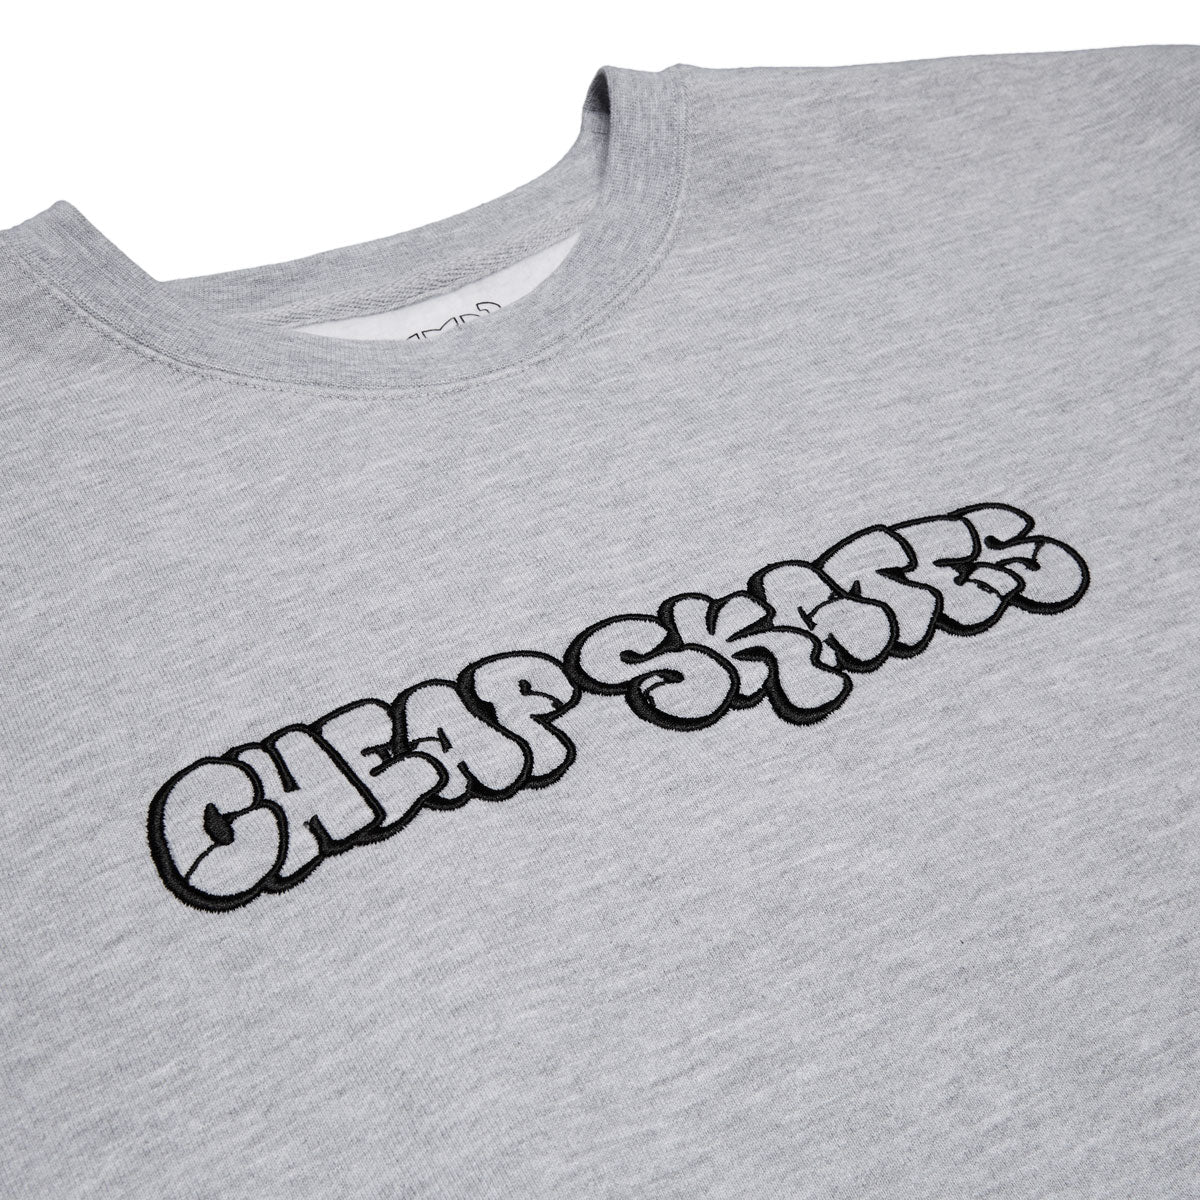 CCS Cheap Skates Tag Heavy Crewneck Sweatshirt - Heather Grey image 2